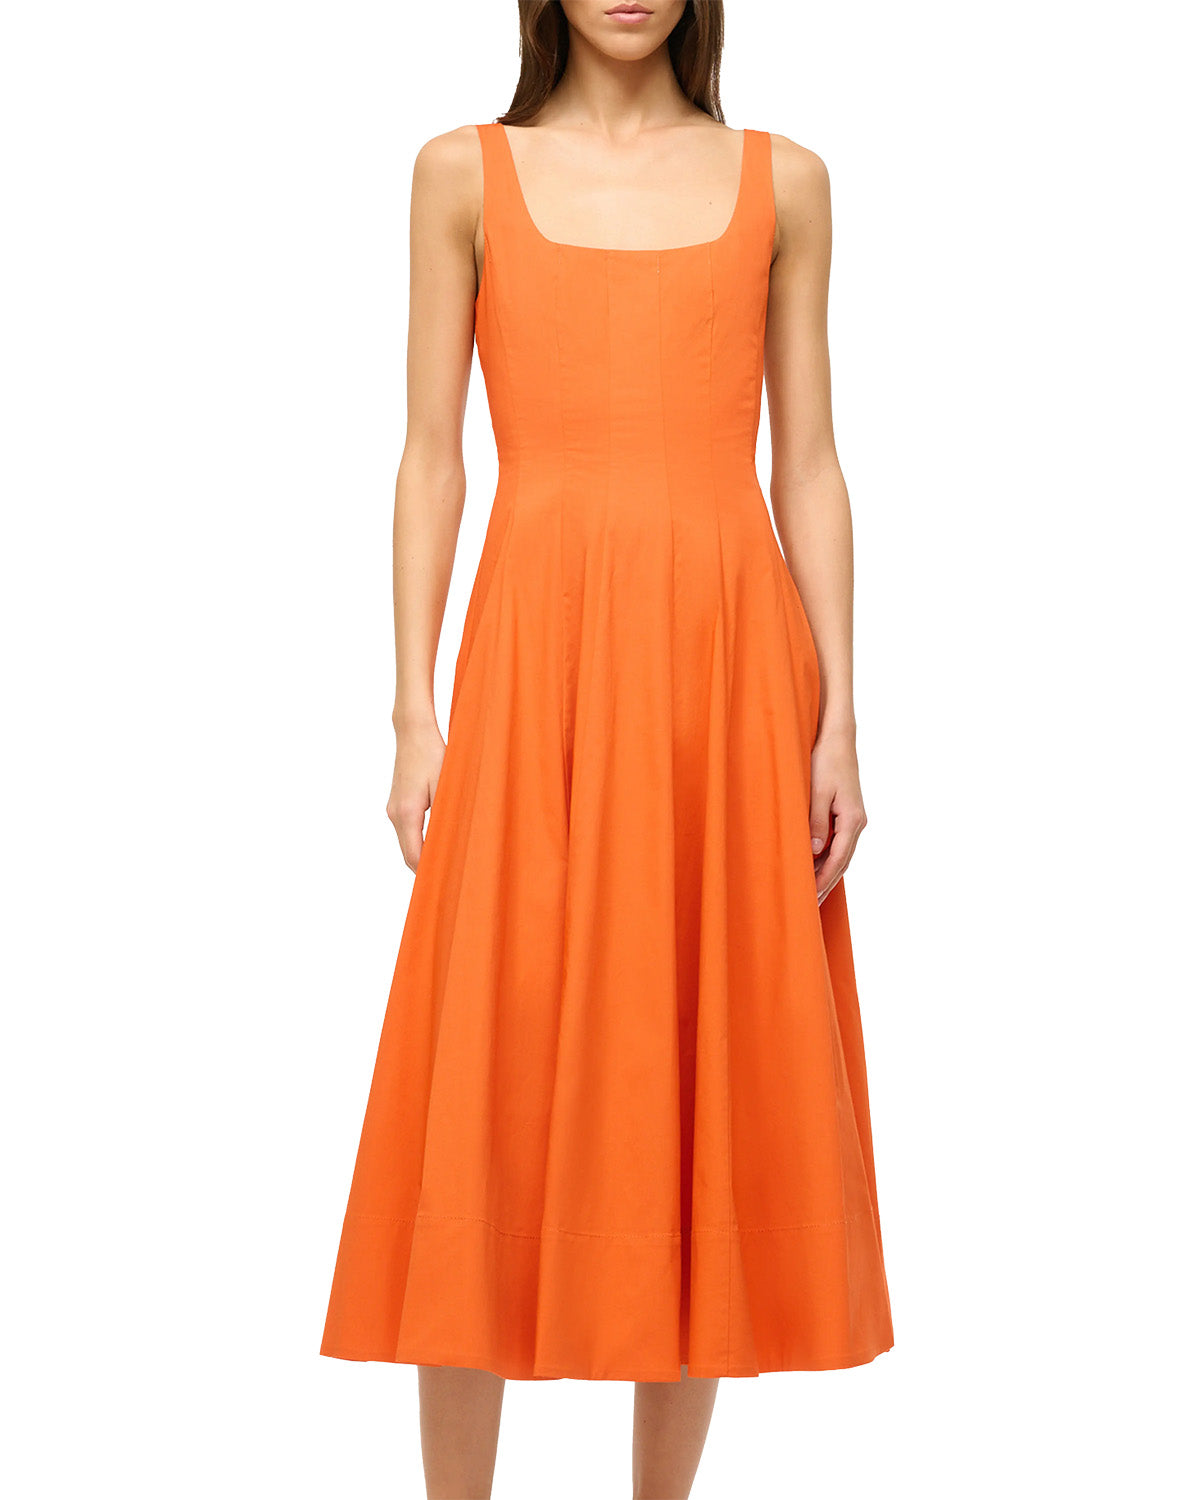 Wells Dress (Tangerine)